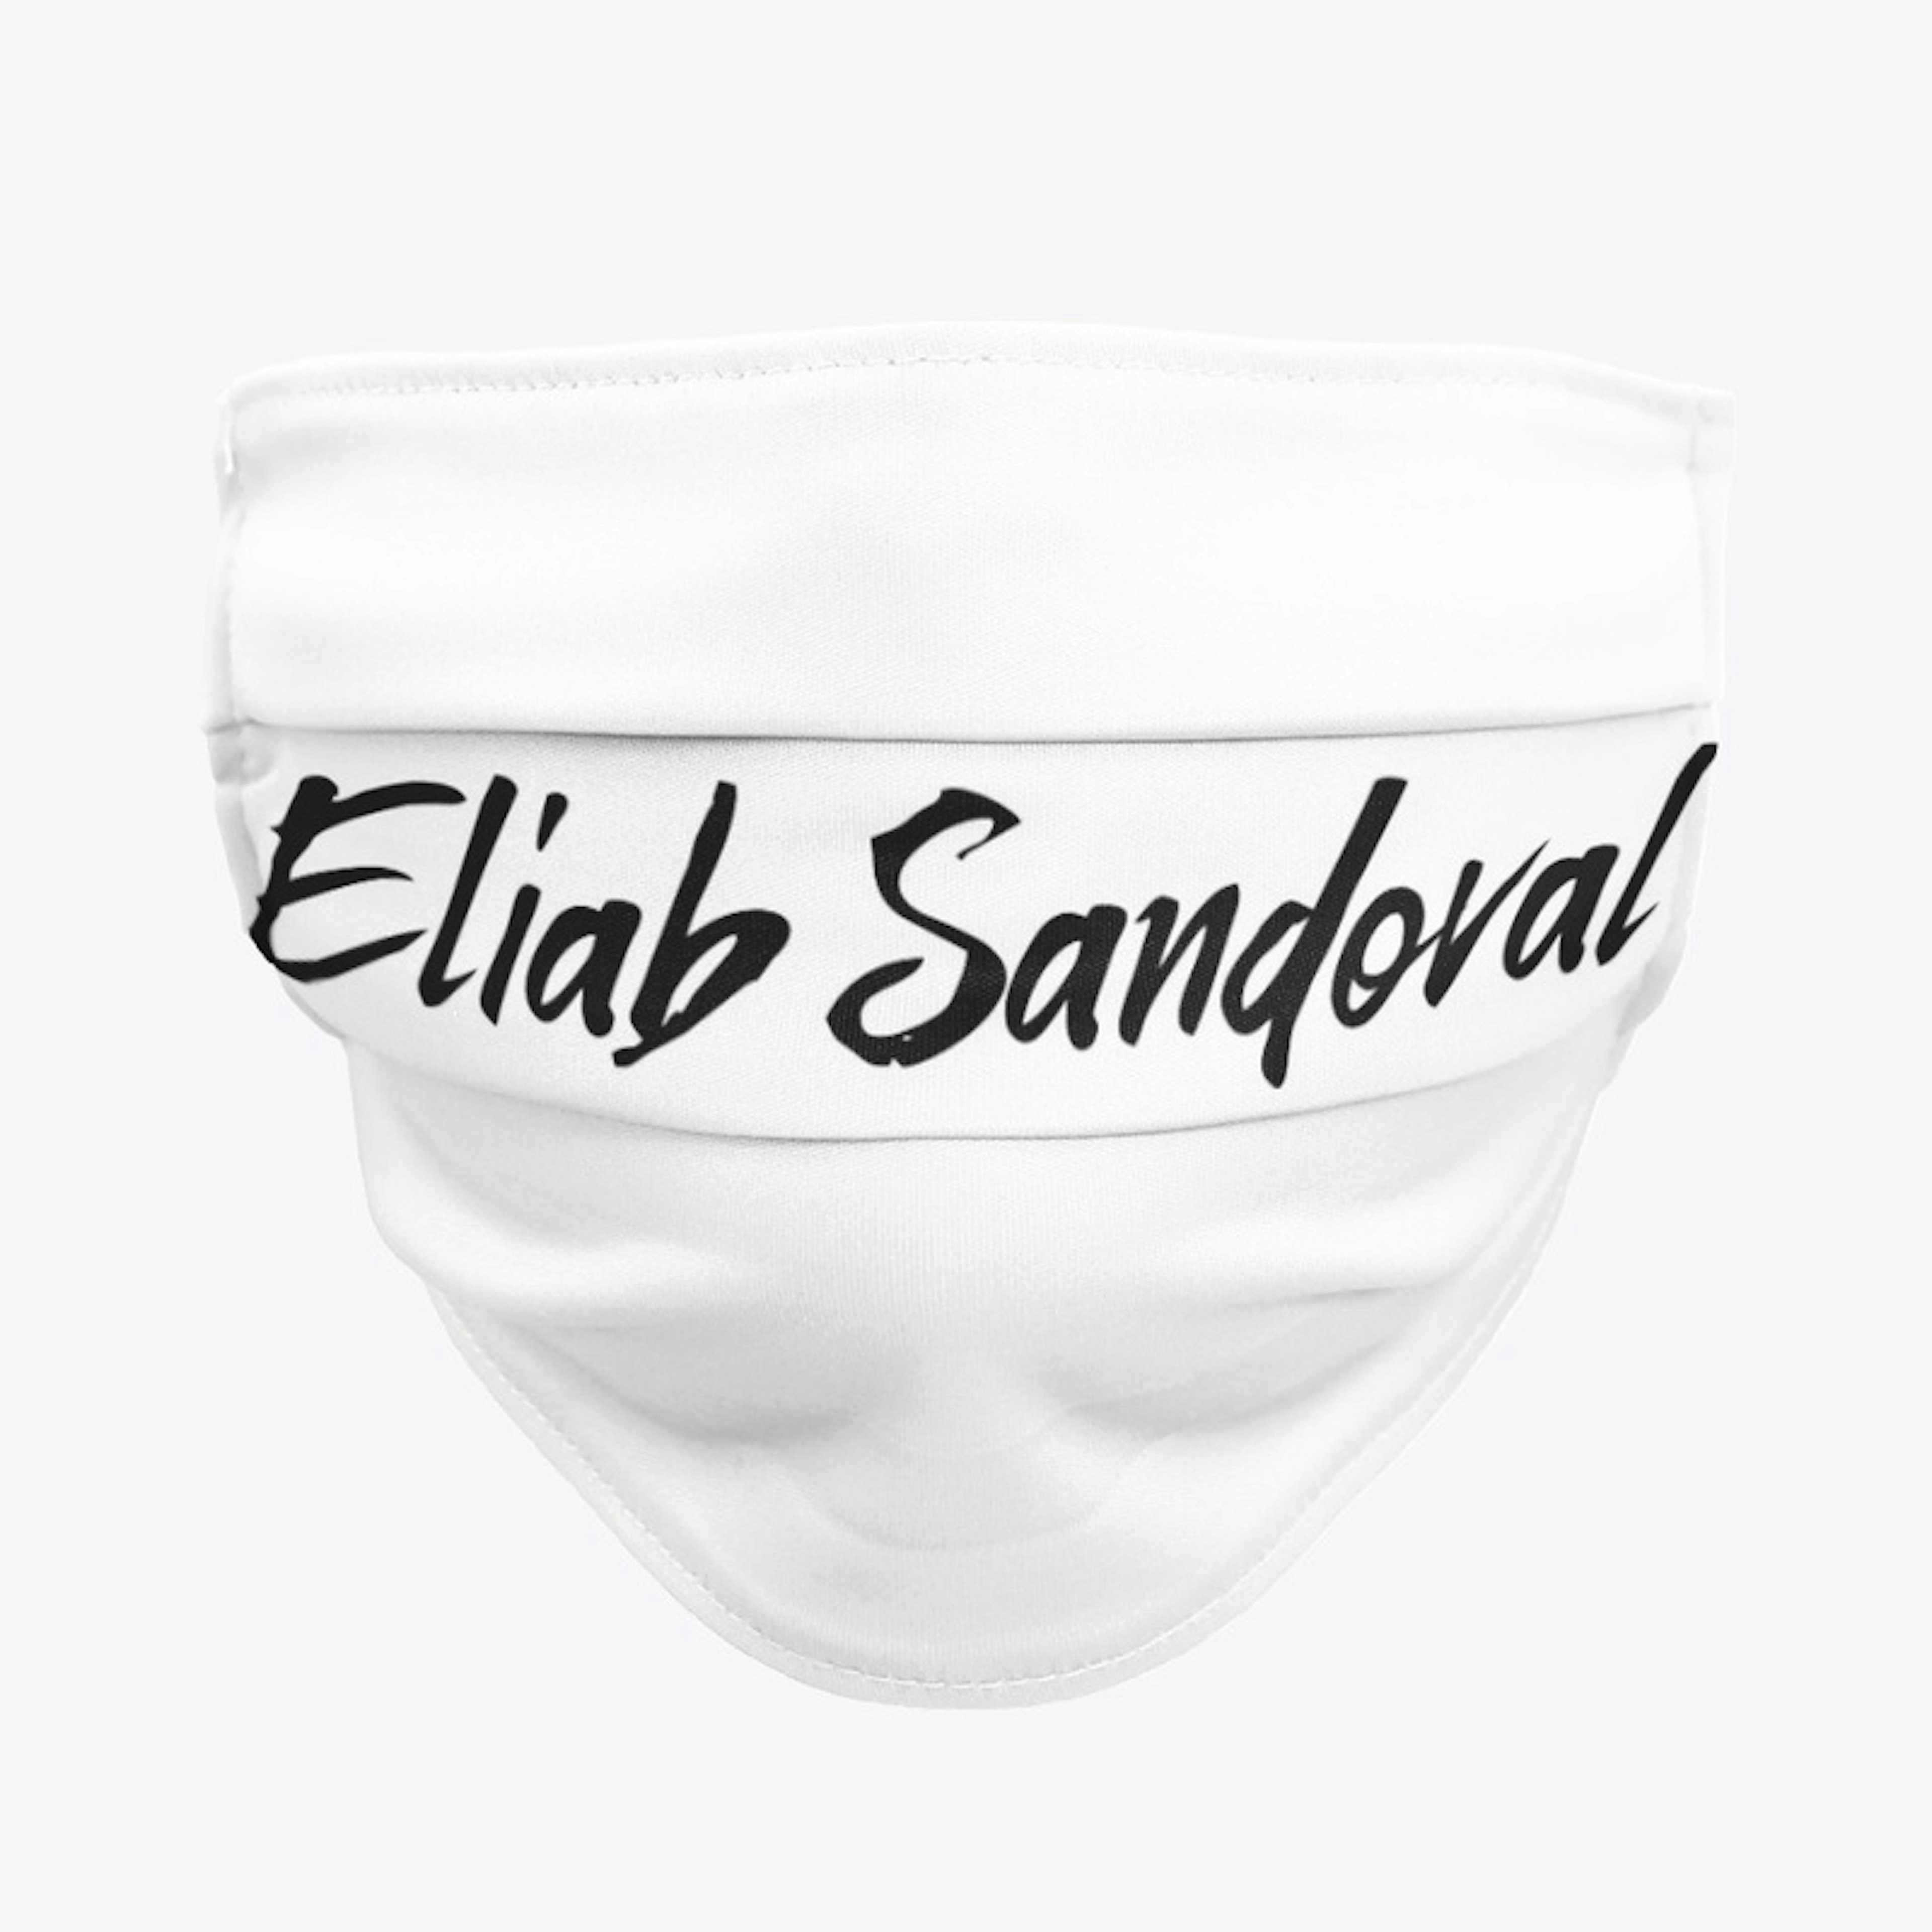 Eliab Sandoval Sticker